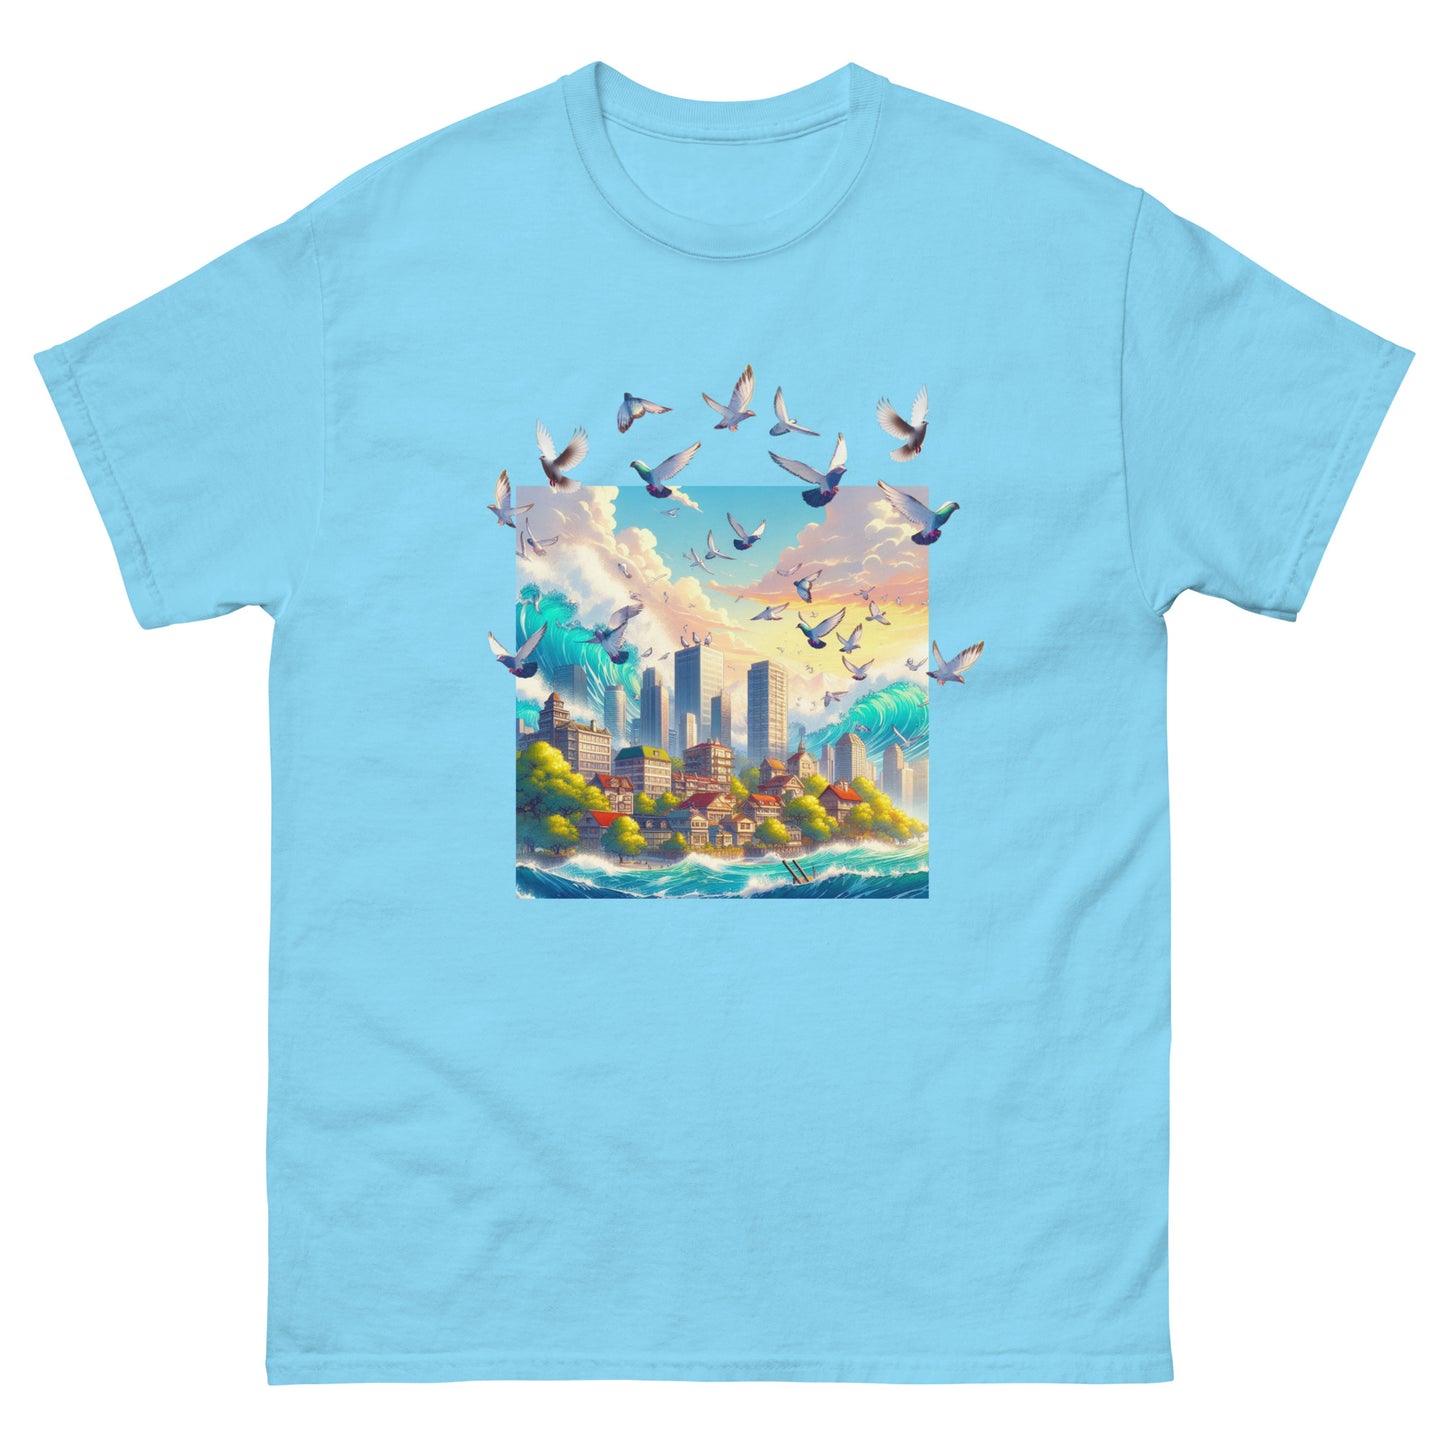 "Birds flying away" T-Shirt